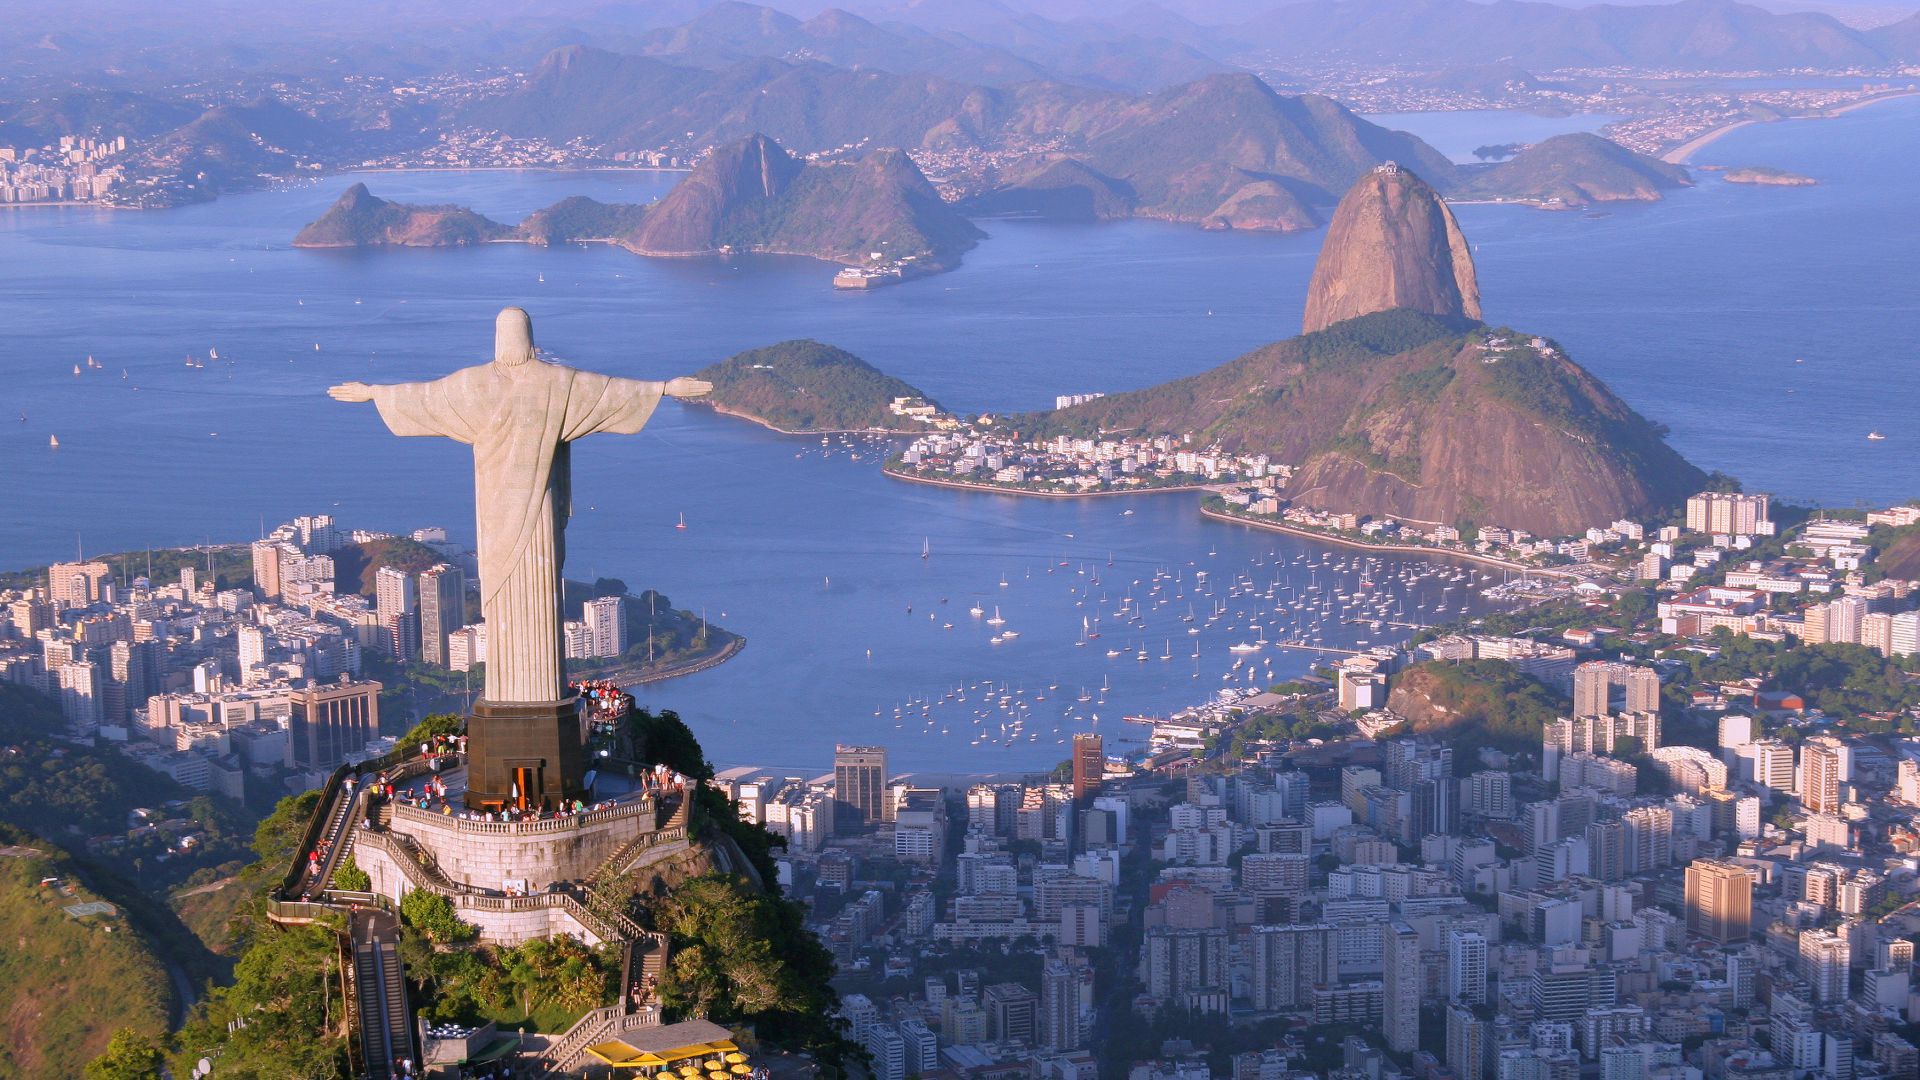 Статуя Христа-Искупителя, Рио-де-Жанейро, Бразилия, Туризм, Путешествие, Christ the Redeemer, Rio de Janeiro, Brazil, Tourism, Travel (horizontal)